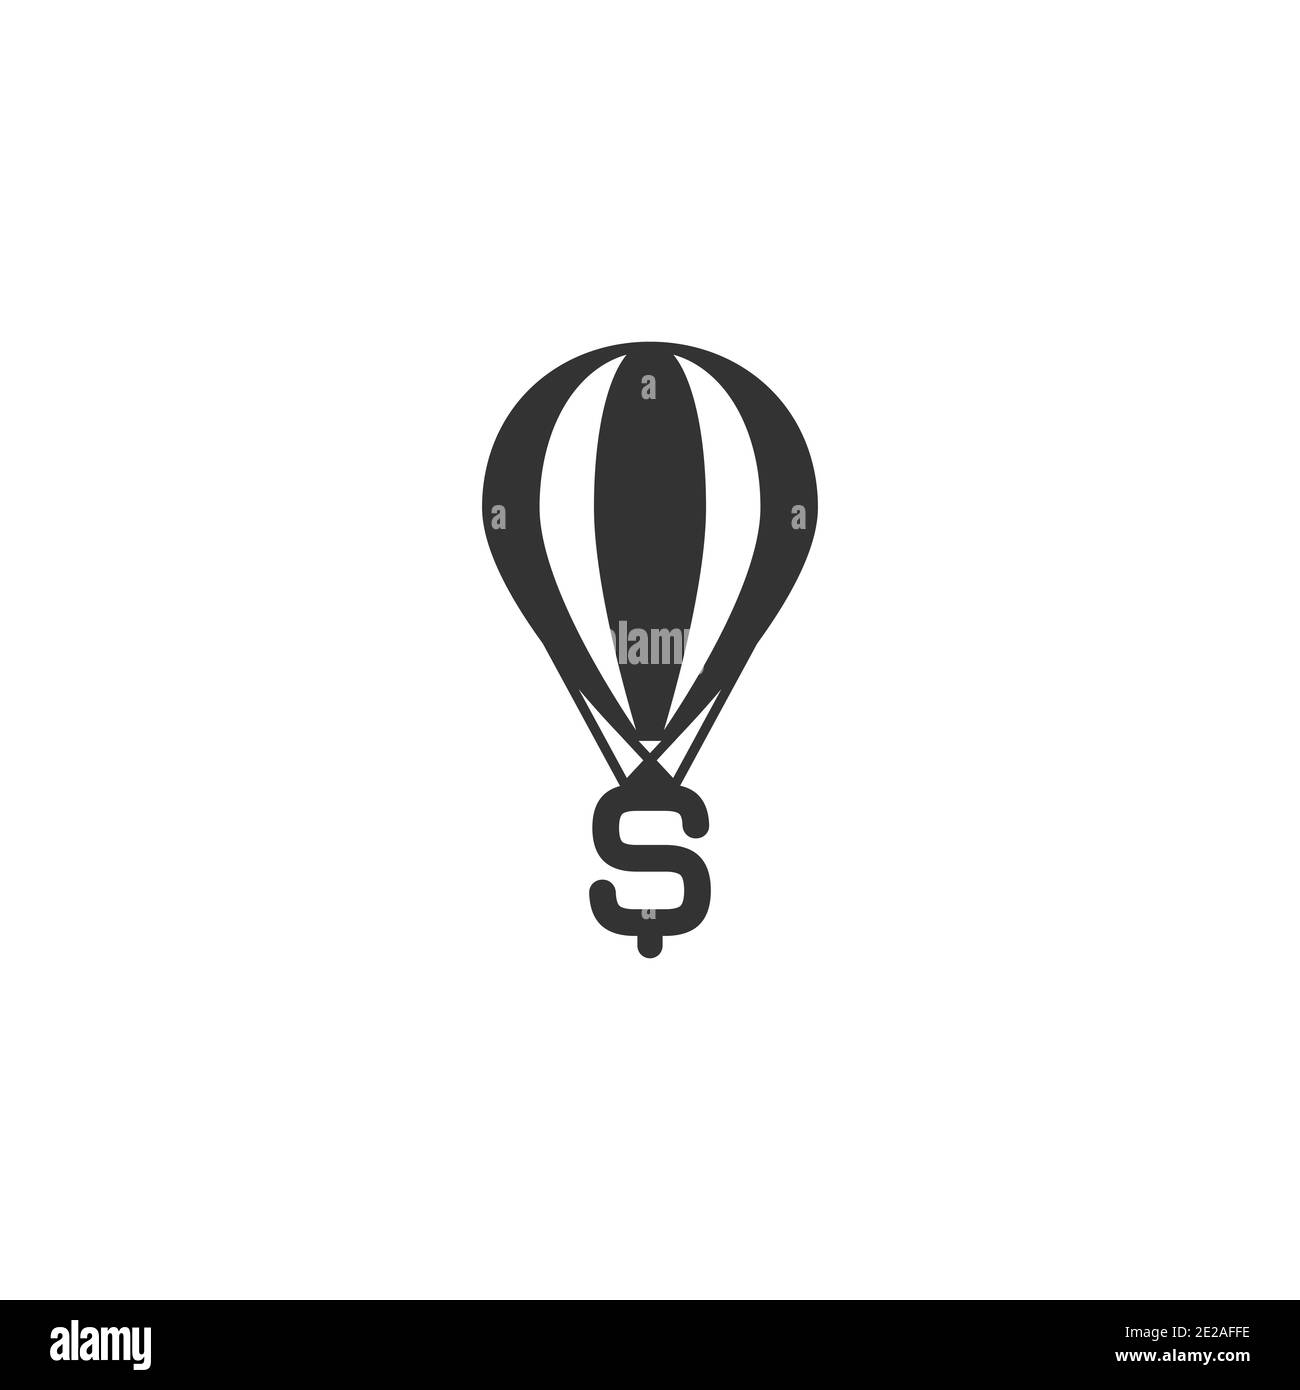 dollar coin air balloon. Black flat icon isolated on white background. Flying money. Economy, finance, money pictogram. Wealth symbol. Vector illustra Stock Vector